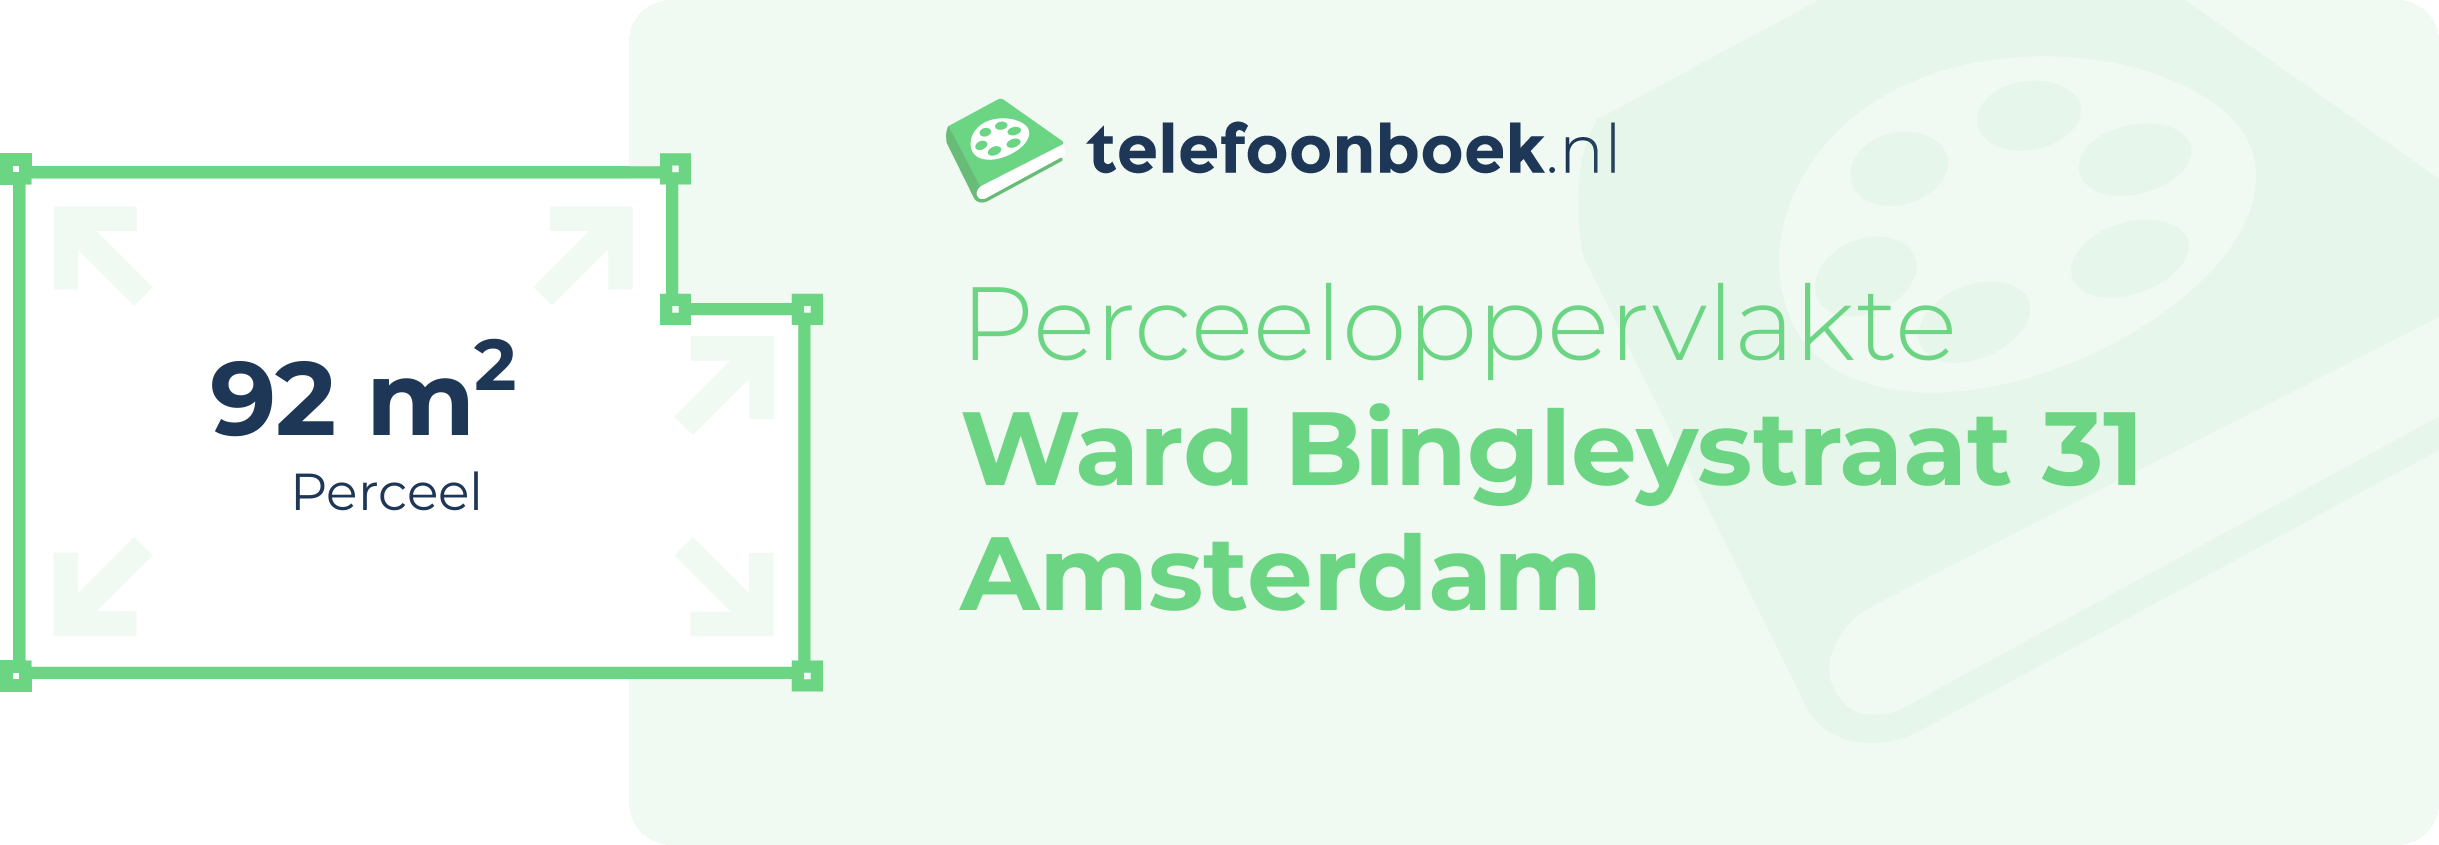 Perceeloppervlakte Ward Bingleystraat 31 Amsterdam